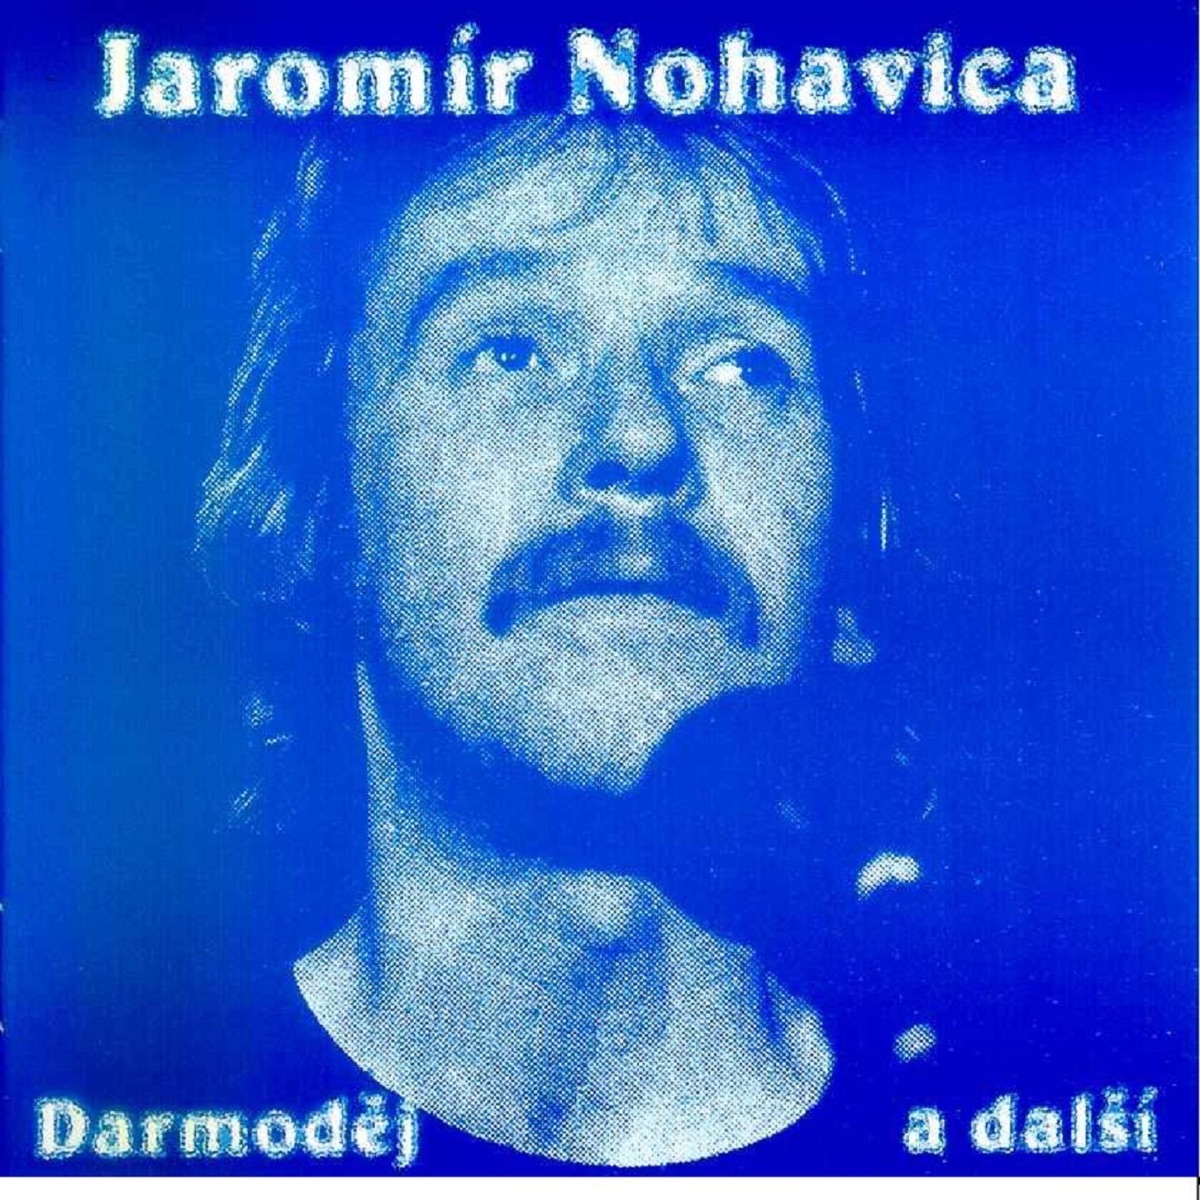 Poruba - Album by Jaromír Nohavica - Apple Music